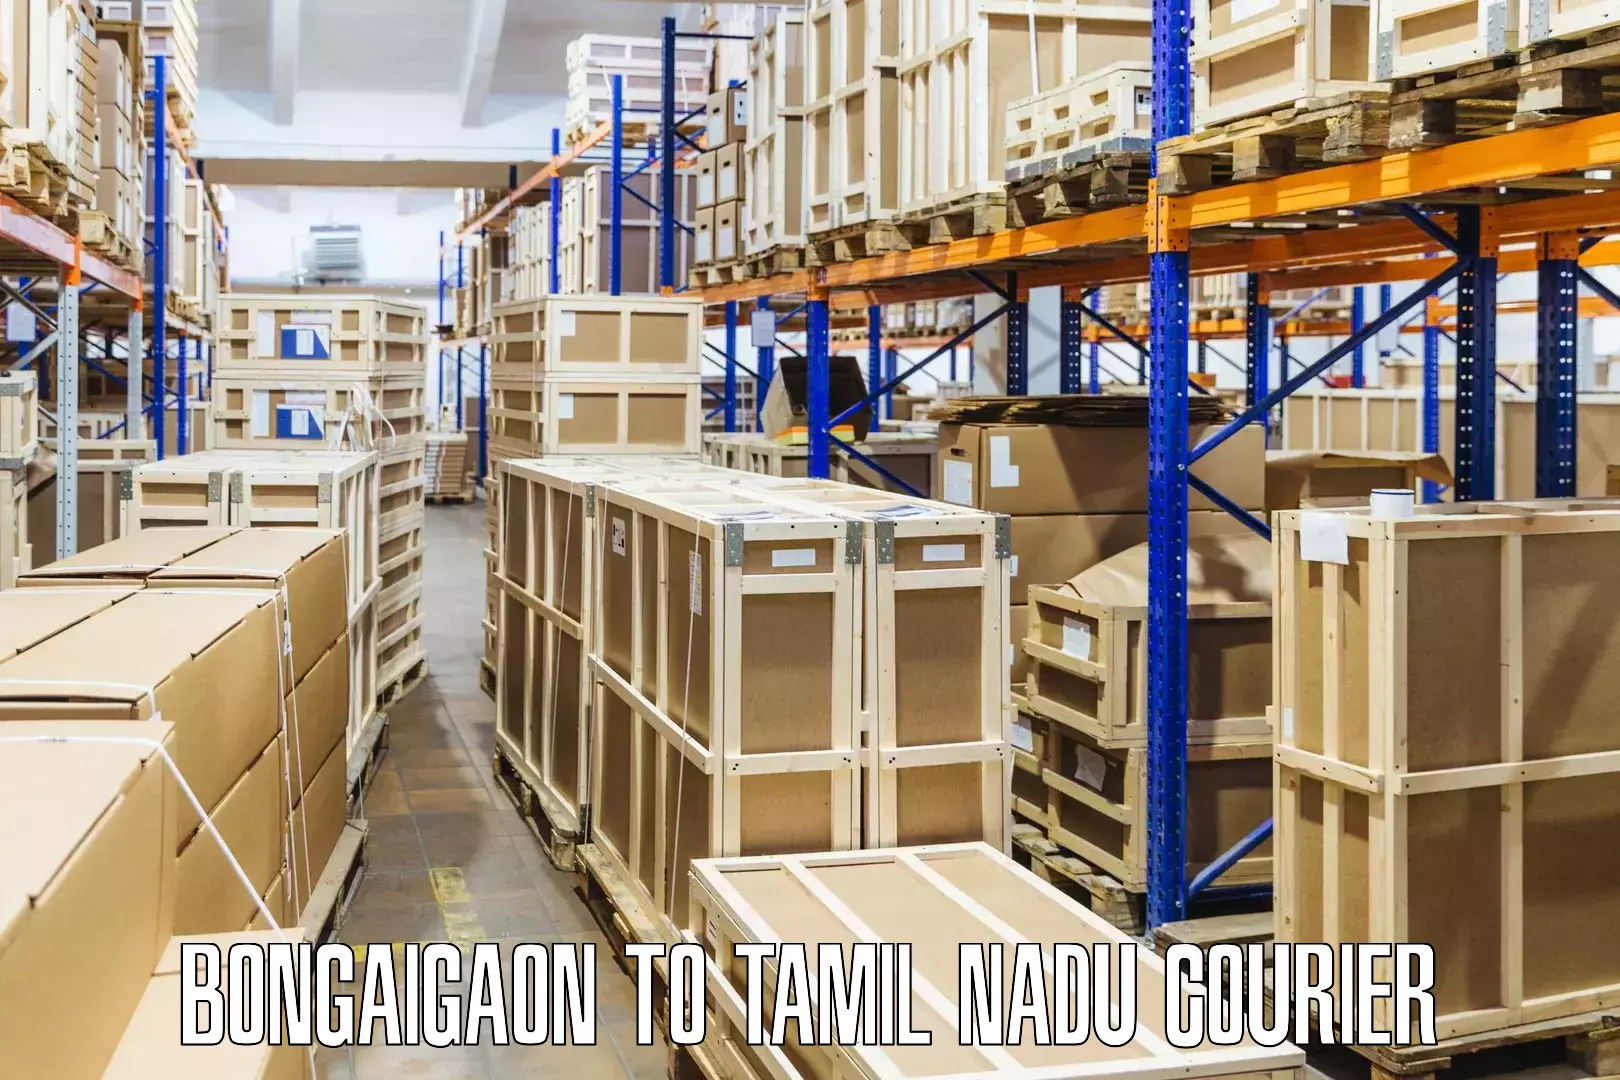 Global shipping networks Bongaigaon to Villupuram